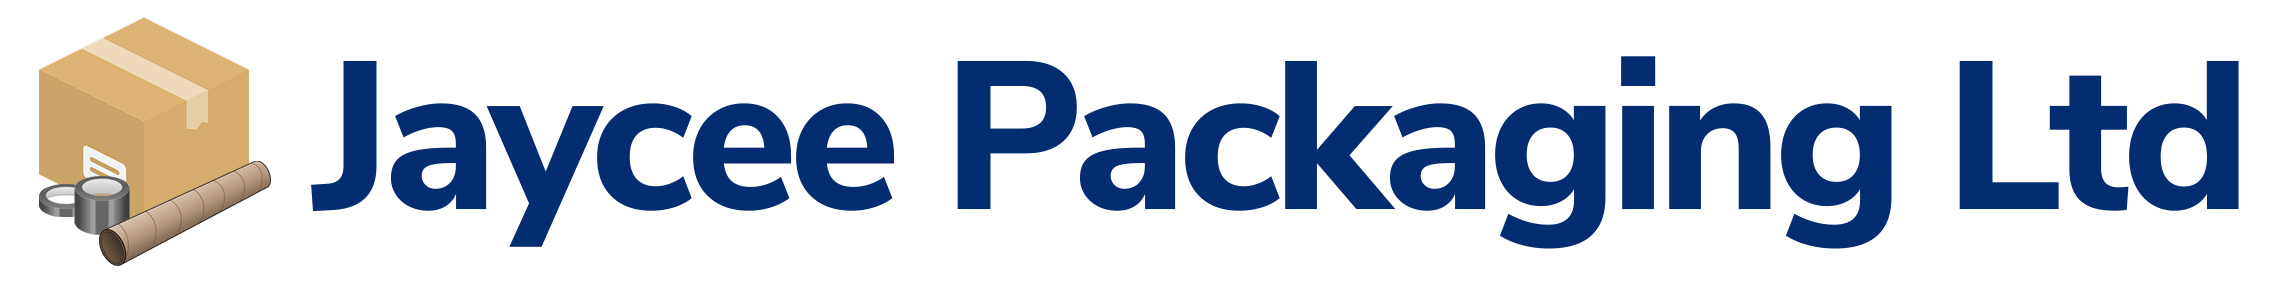 Jaycee Packaging logo